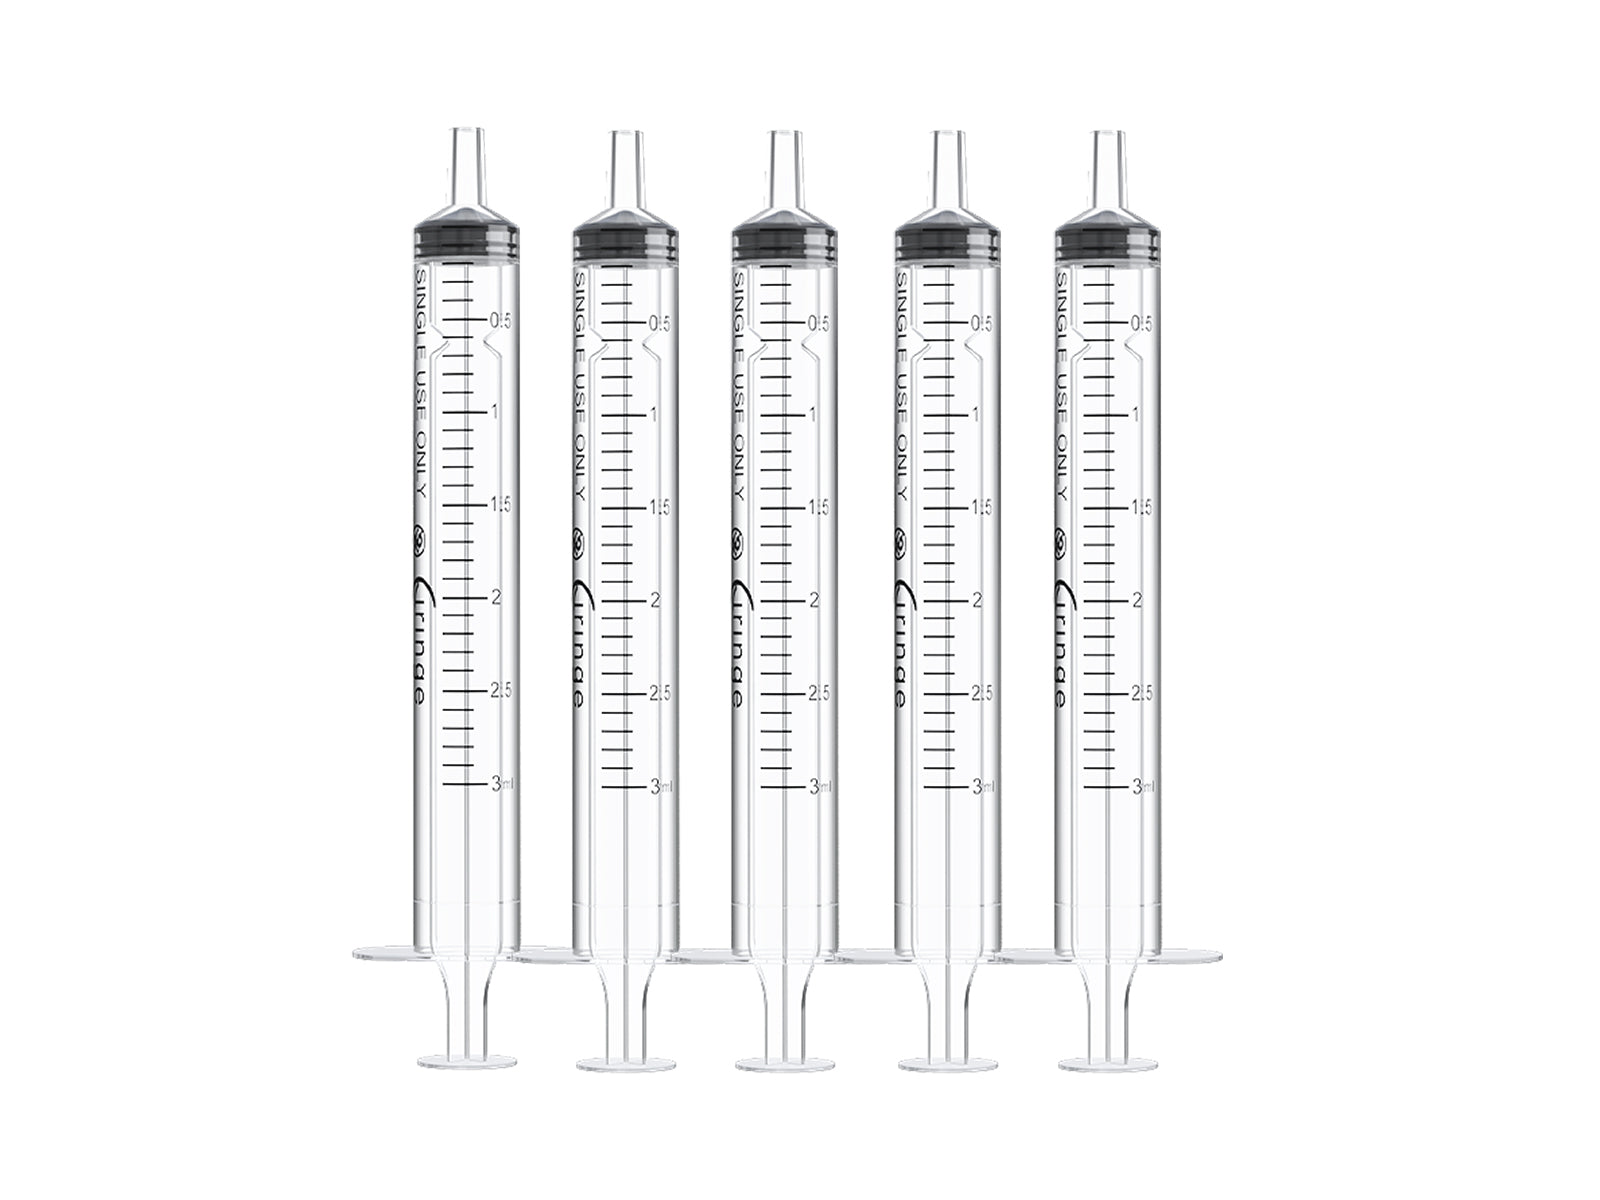 Ciringe Disposable Syringes - Pack of 5